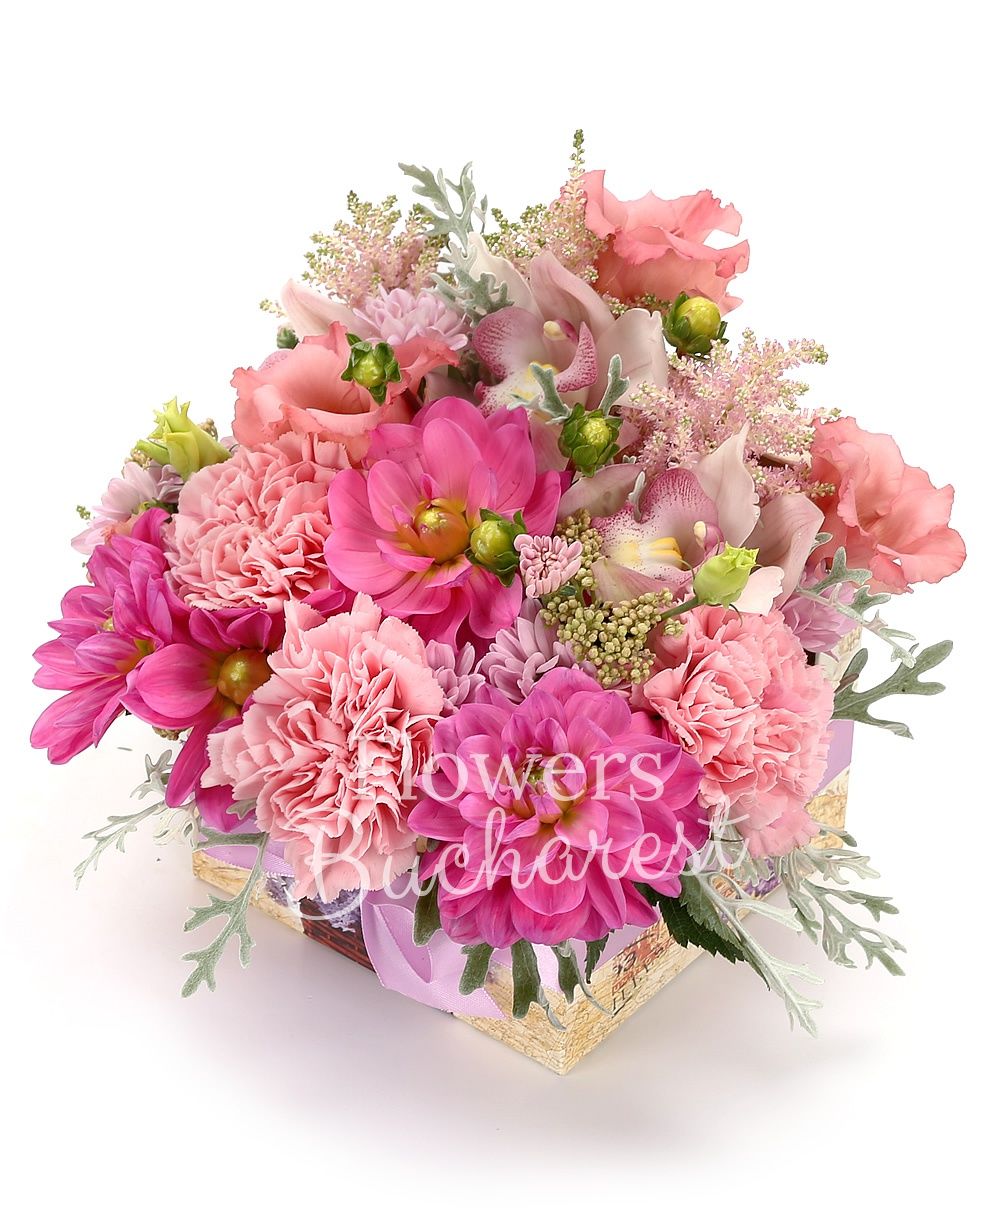 3 pink astilbe, 3 pink dahlias, 3 pink carnations, 2 pink lisianthus, 1 pink chrysanthemum, white cymbidium, greenery